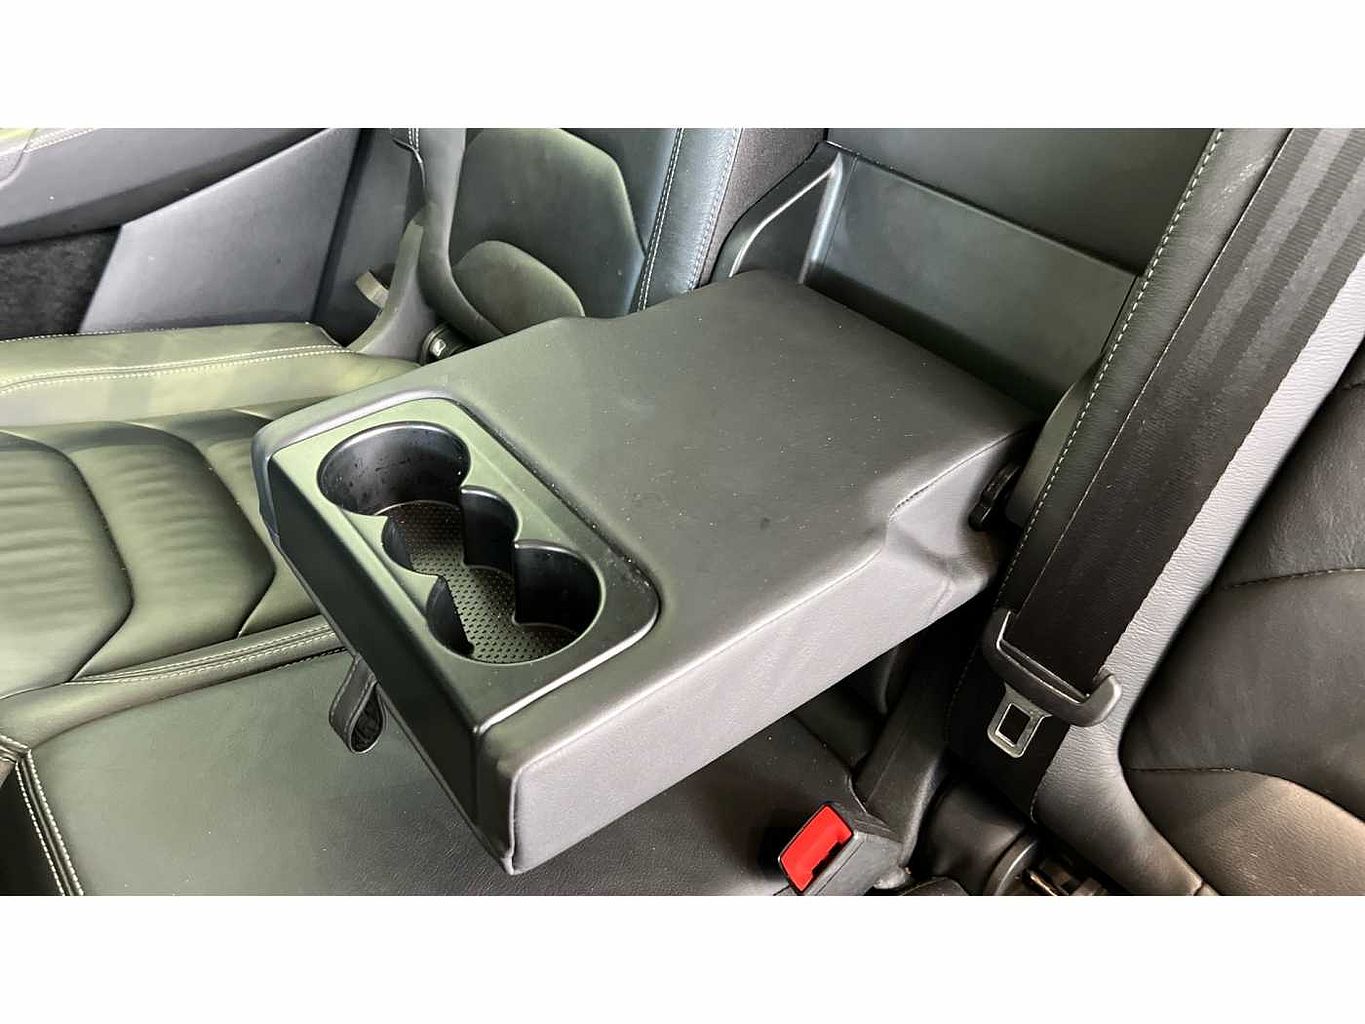 SKODA Kodiaq 1.5 TSI (150ps) SE (7 seats) ACT DSG SUV